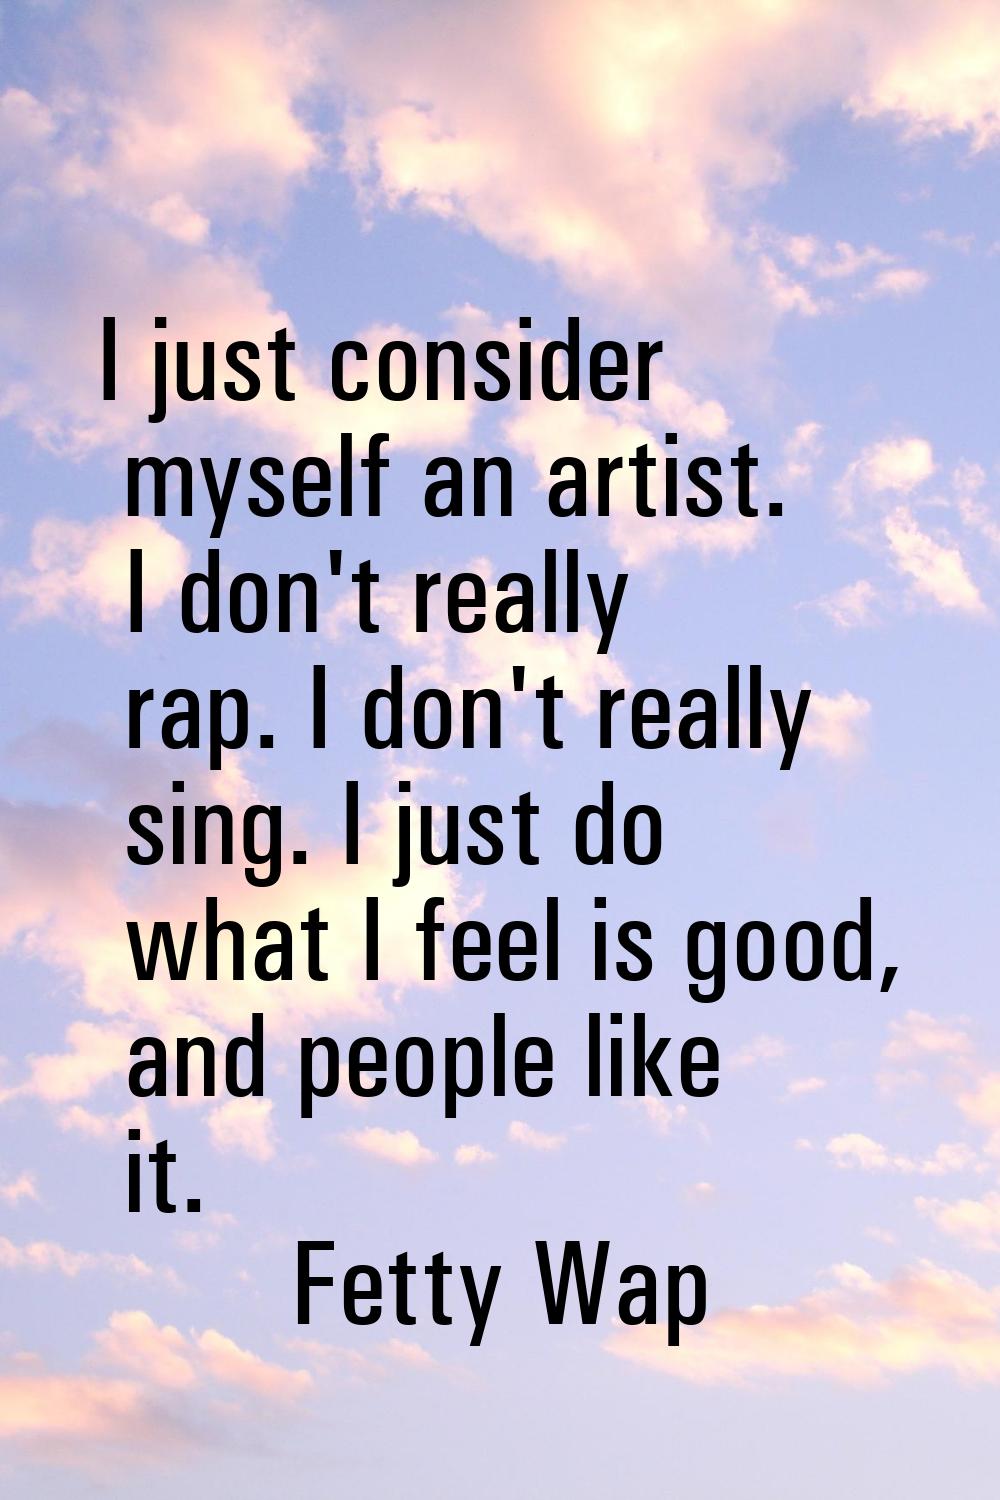 I just consider myself an artist. I don't really rap. I don't really sing. I just do what I feel is